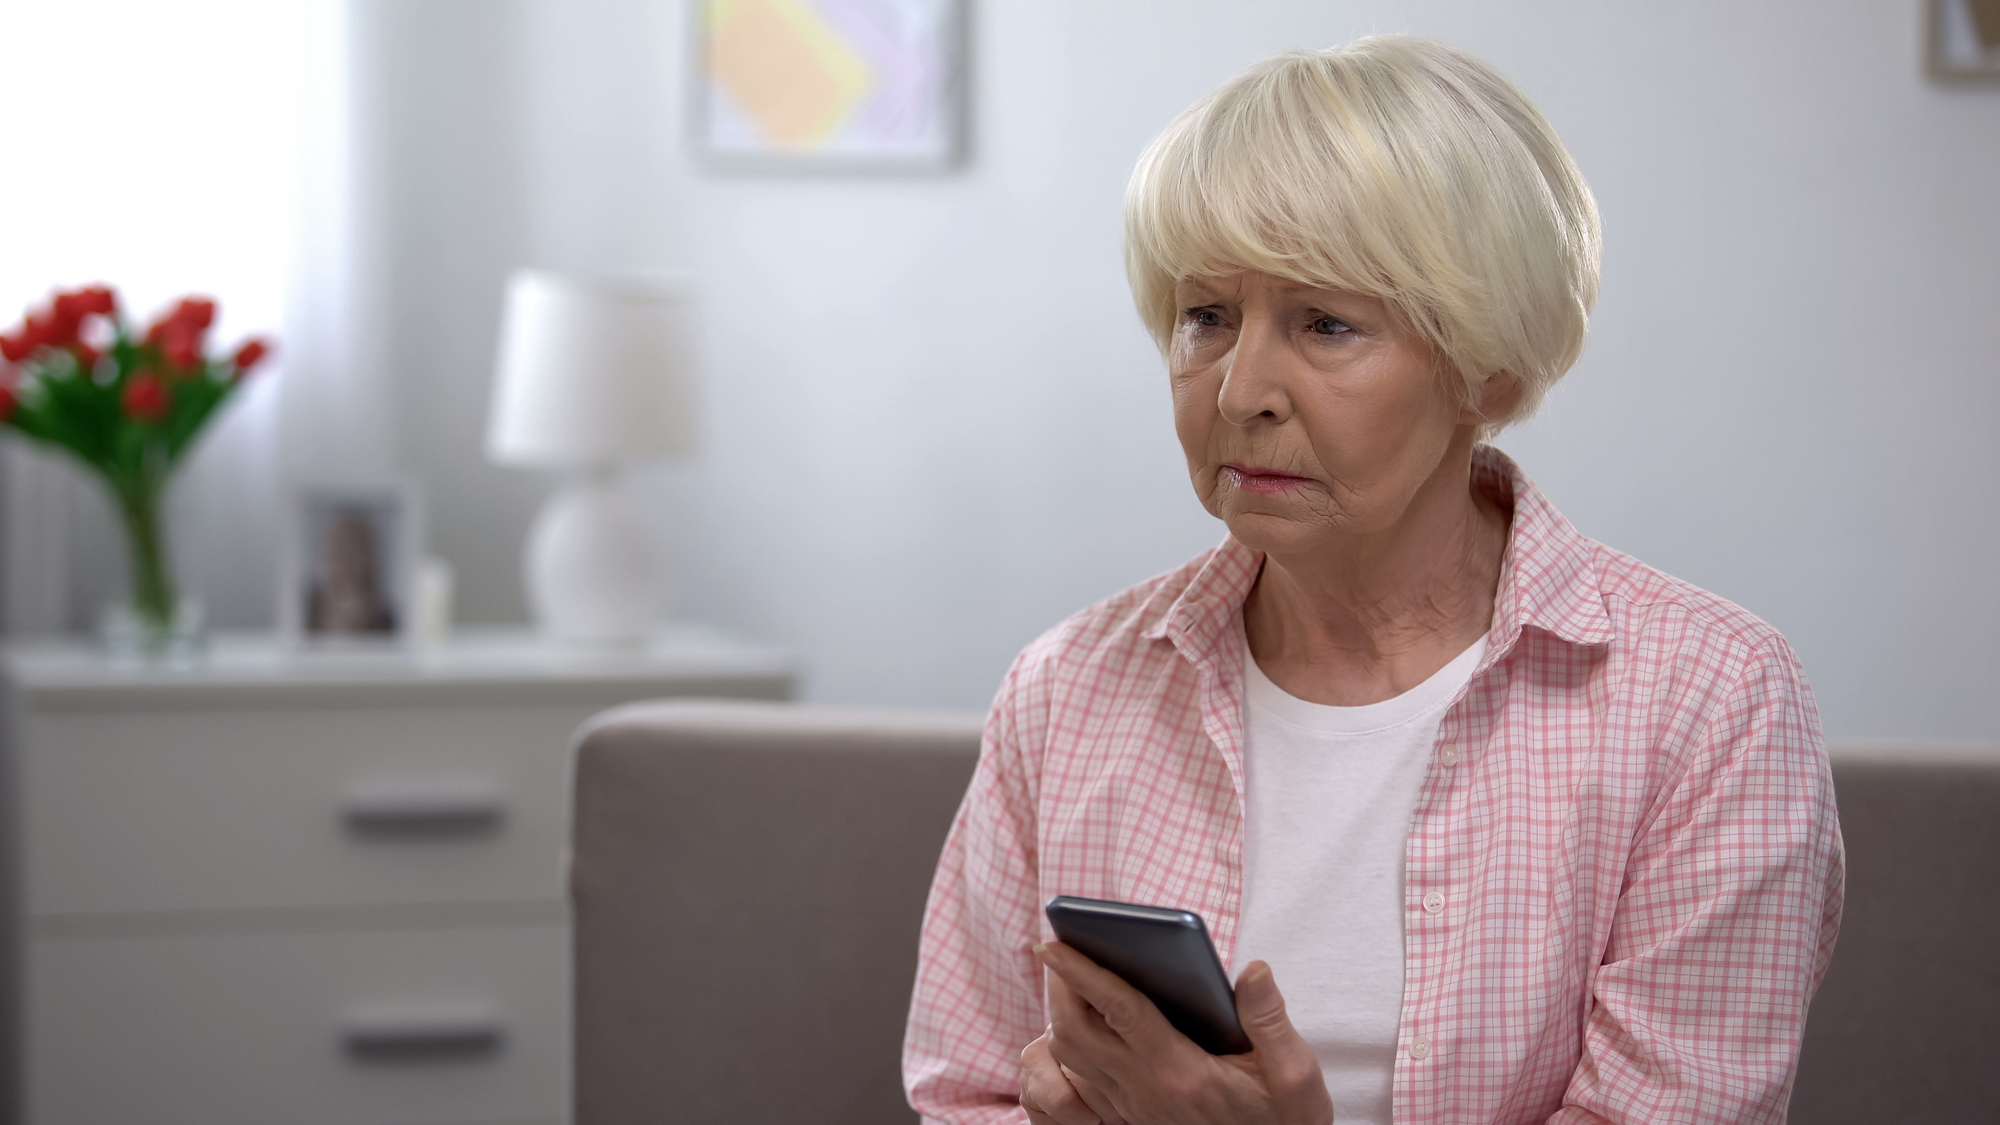 Depressed elderly woman holding smartphone, bad news from relatives, melancholy